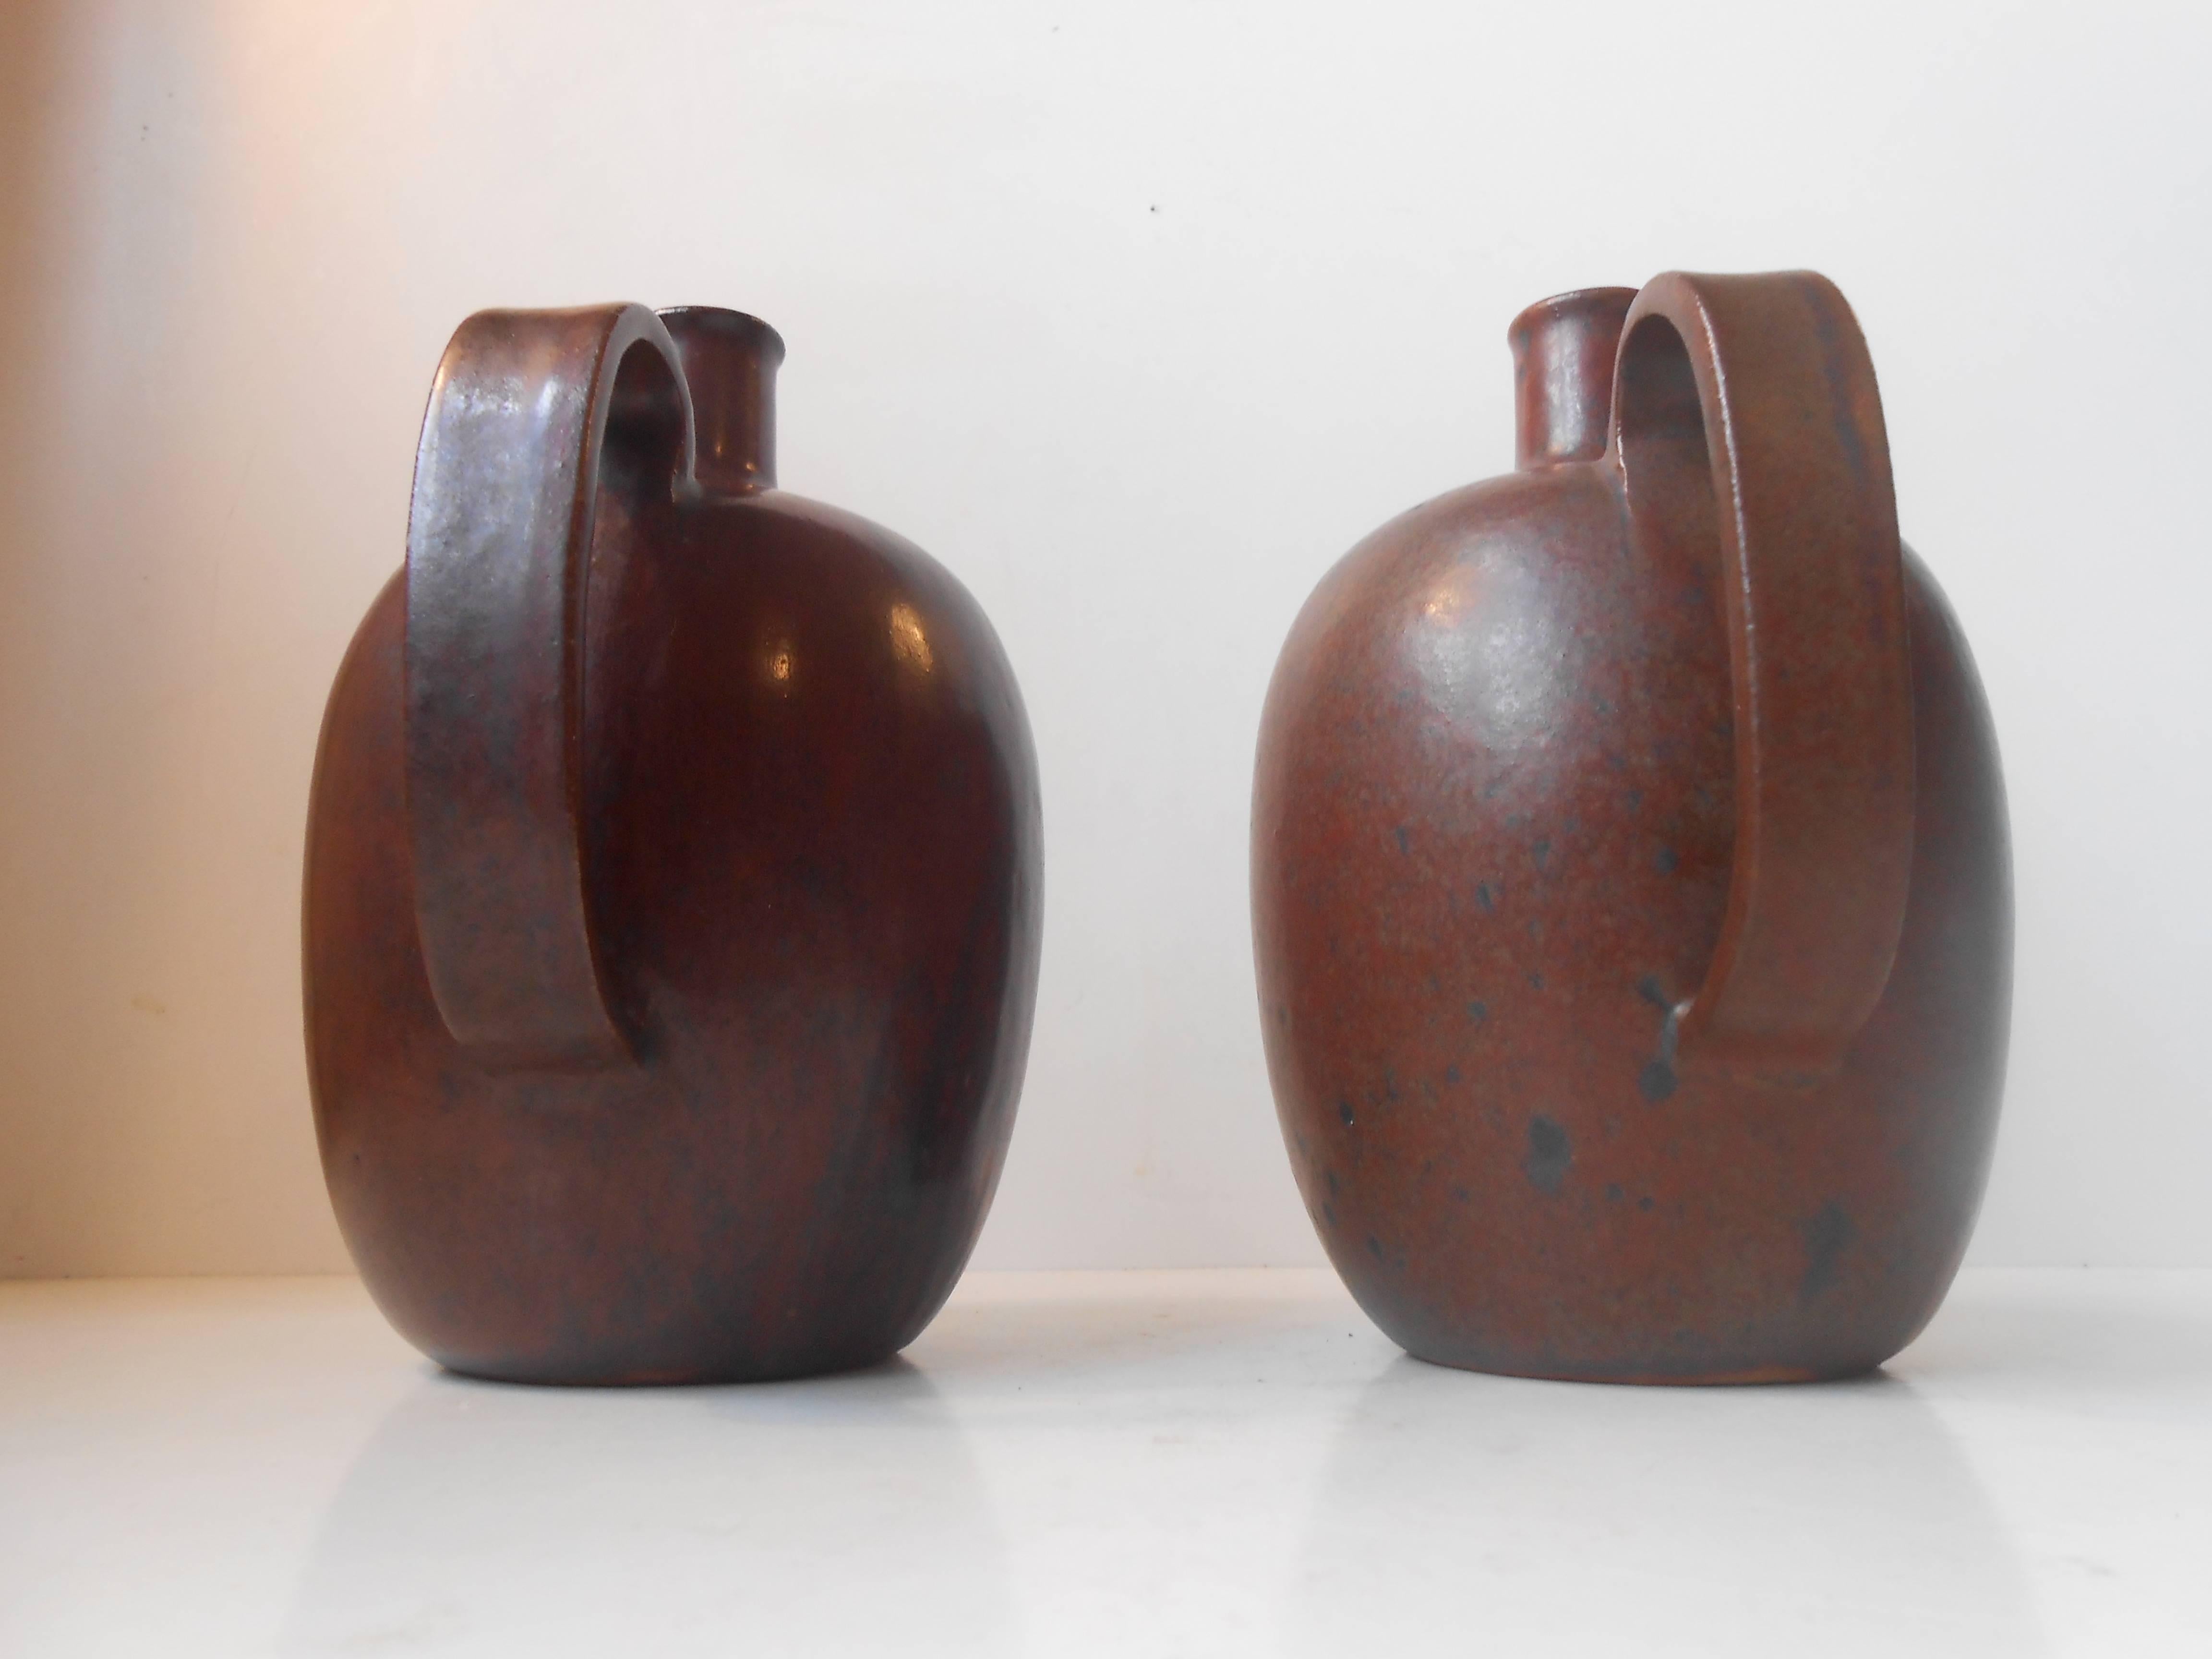 Arne Bang Glazed Stoneware Bottle Vases, 1930s For Sale 4